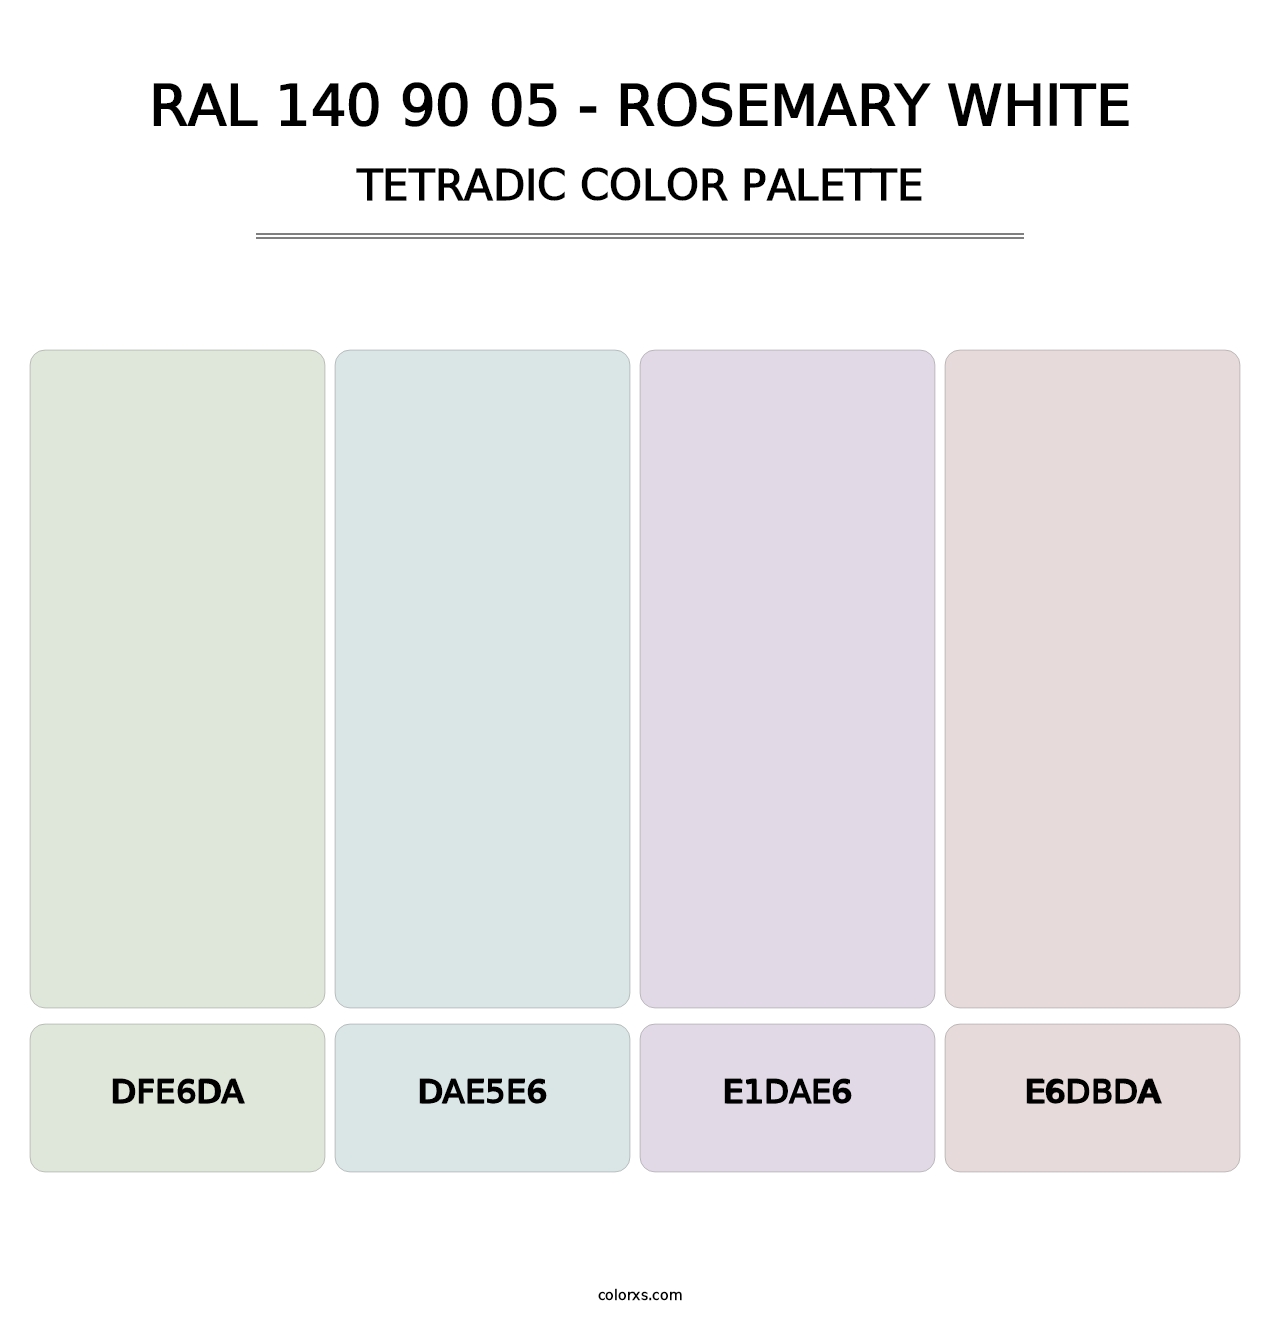 RAL 140 90 05 - Rosemary White - Tetradic Color Palette